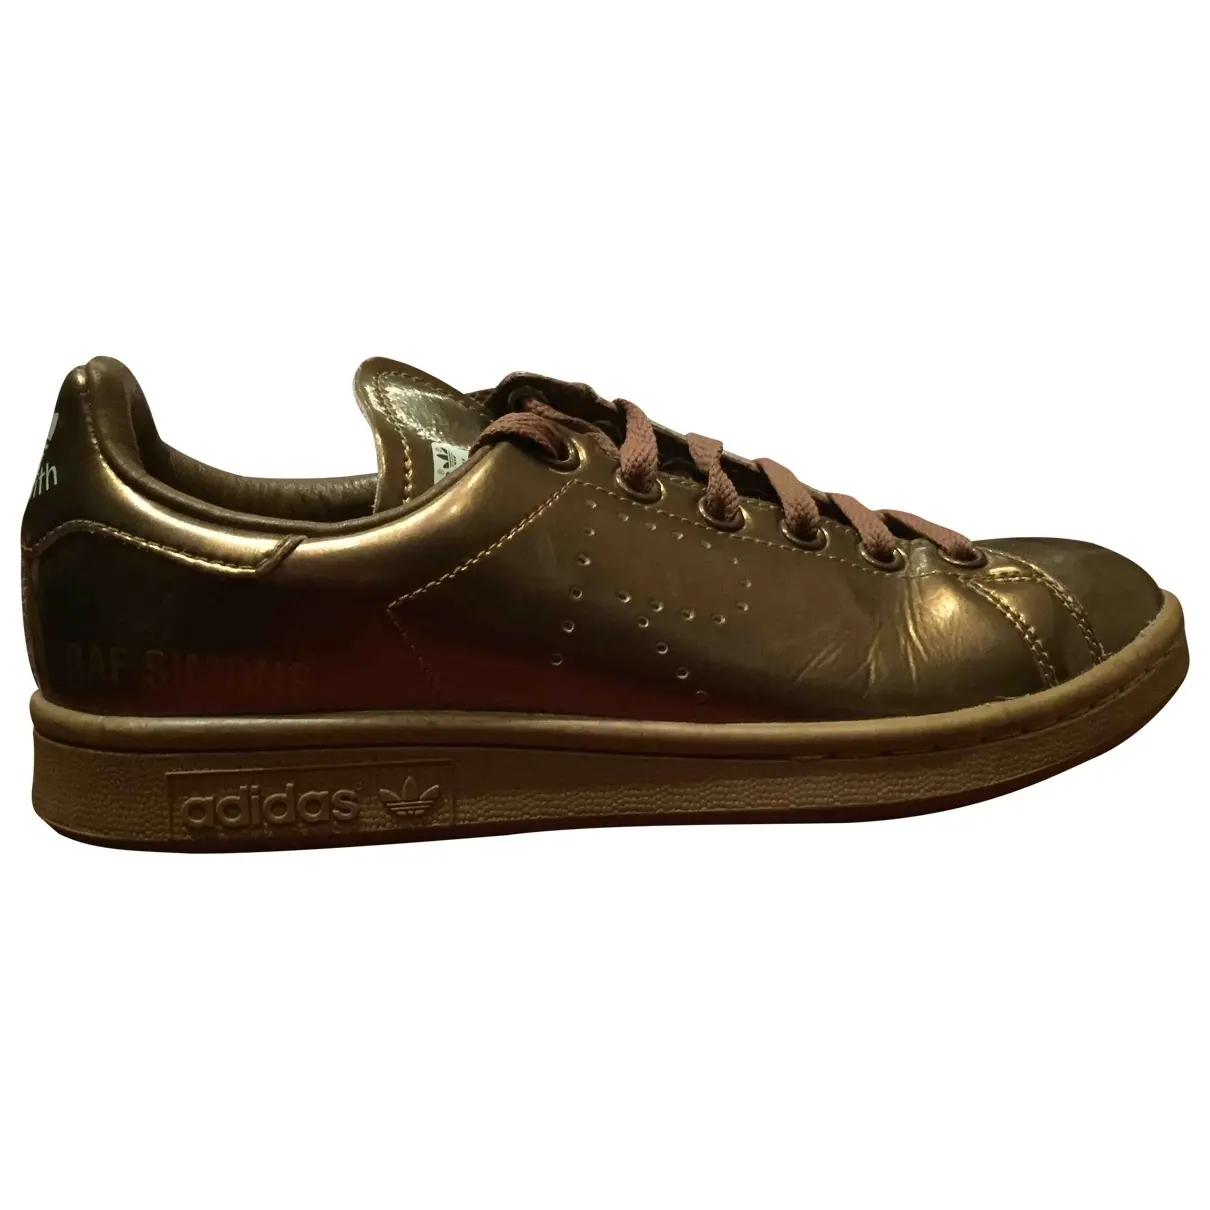 Stan Smith leather trainers Adidas x Raf Simons